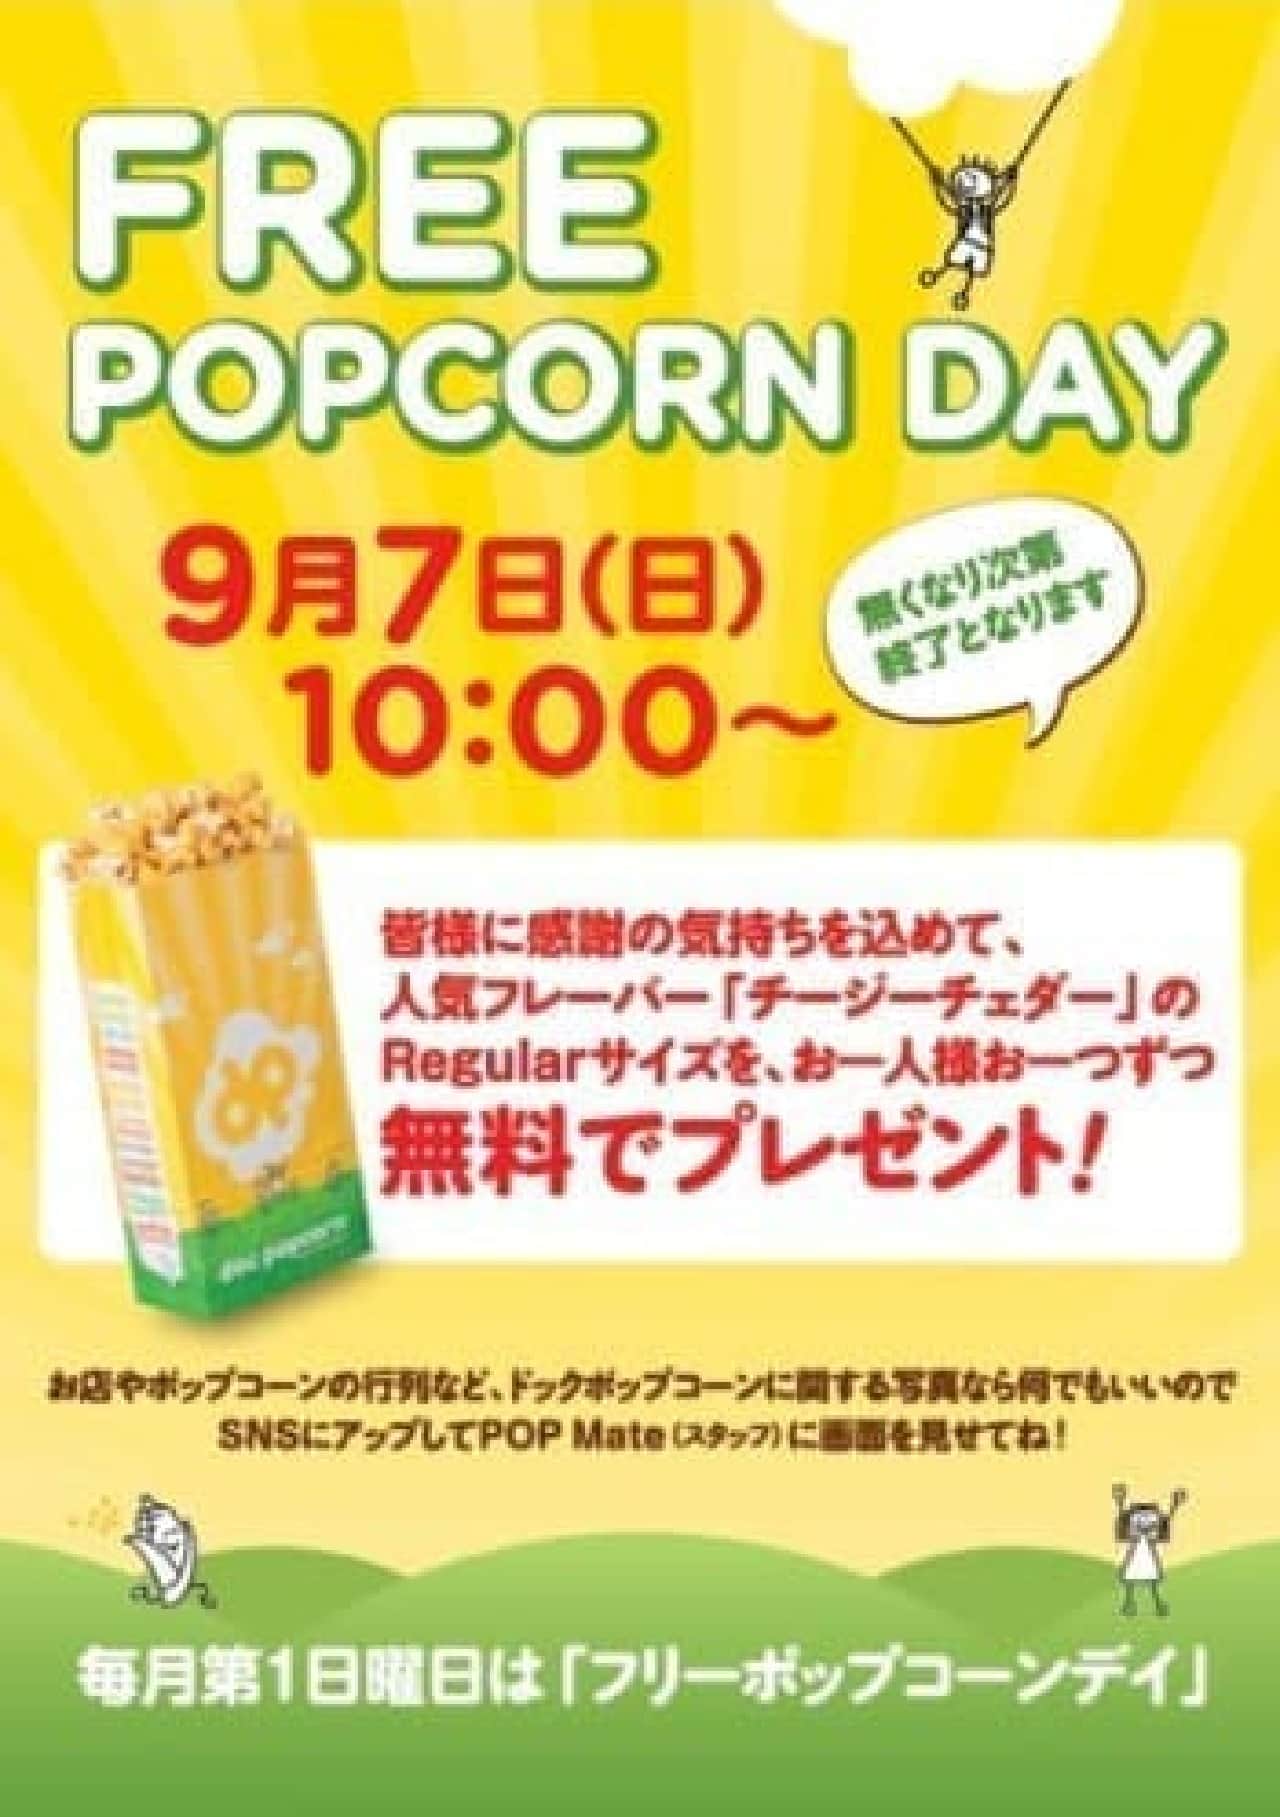 Get popular popcorn for free!